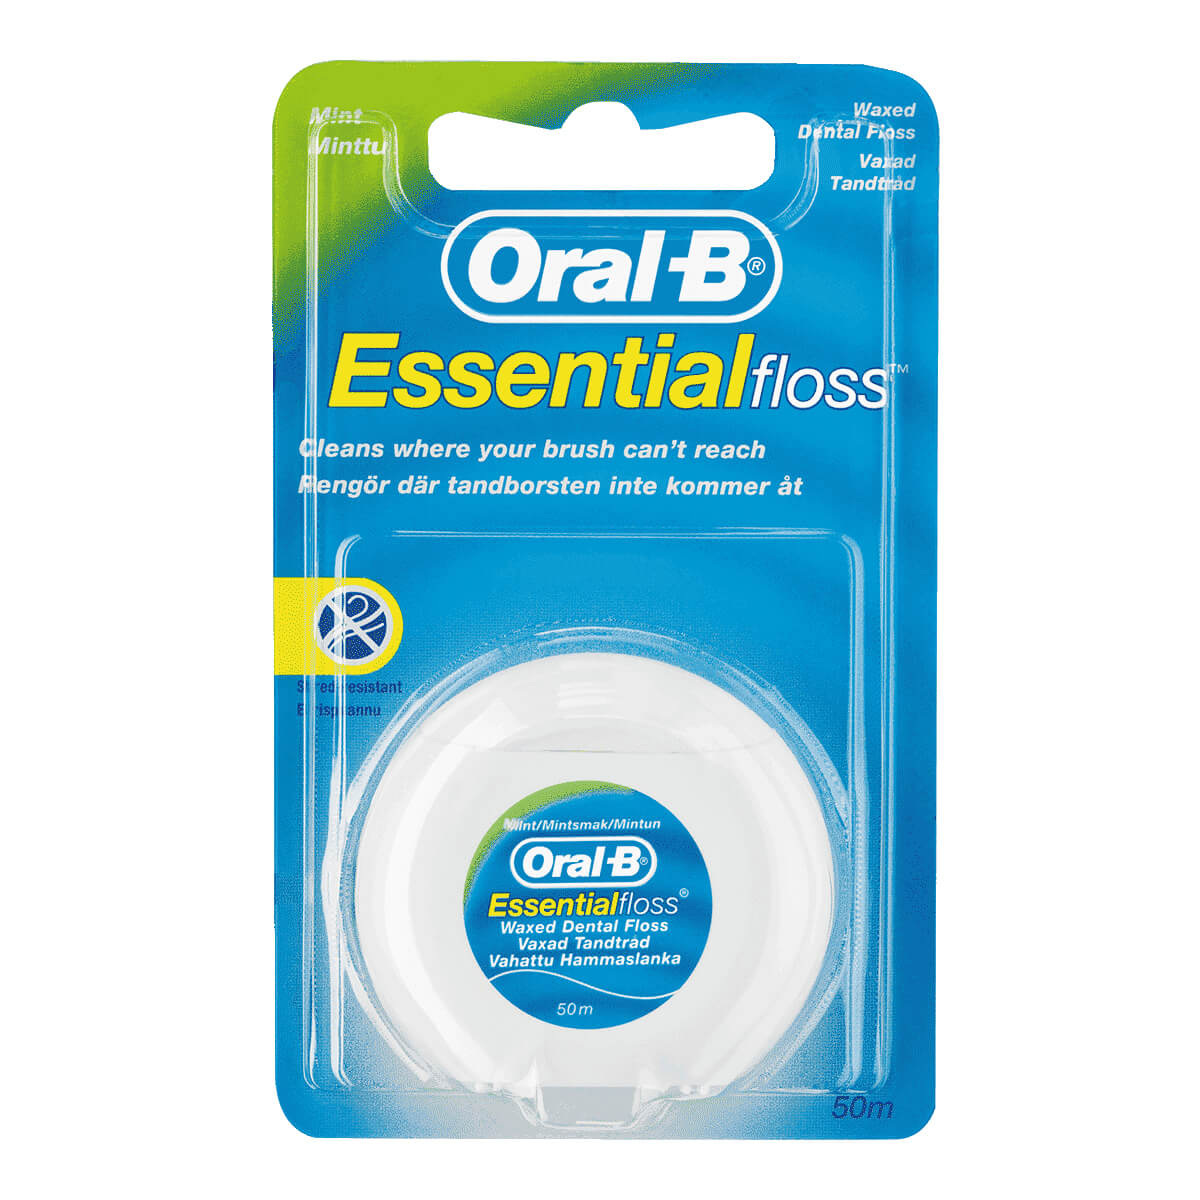 festspil filosofi Mælkehvid Oral-B Essential dental floss waxed, mint | Oral-B